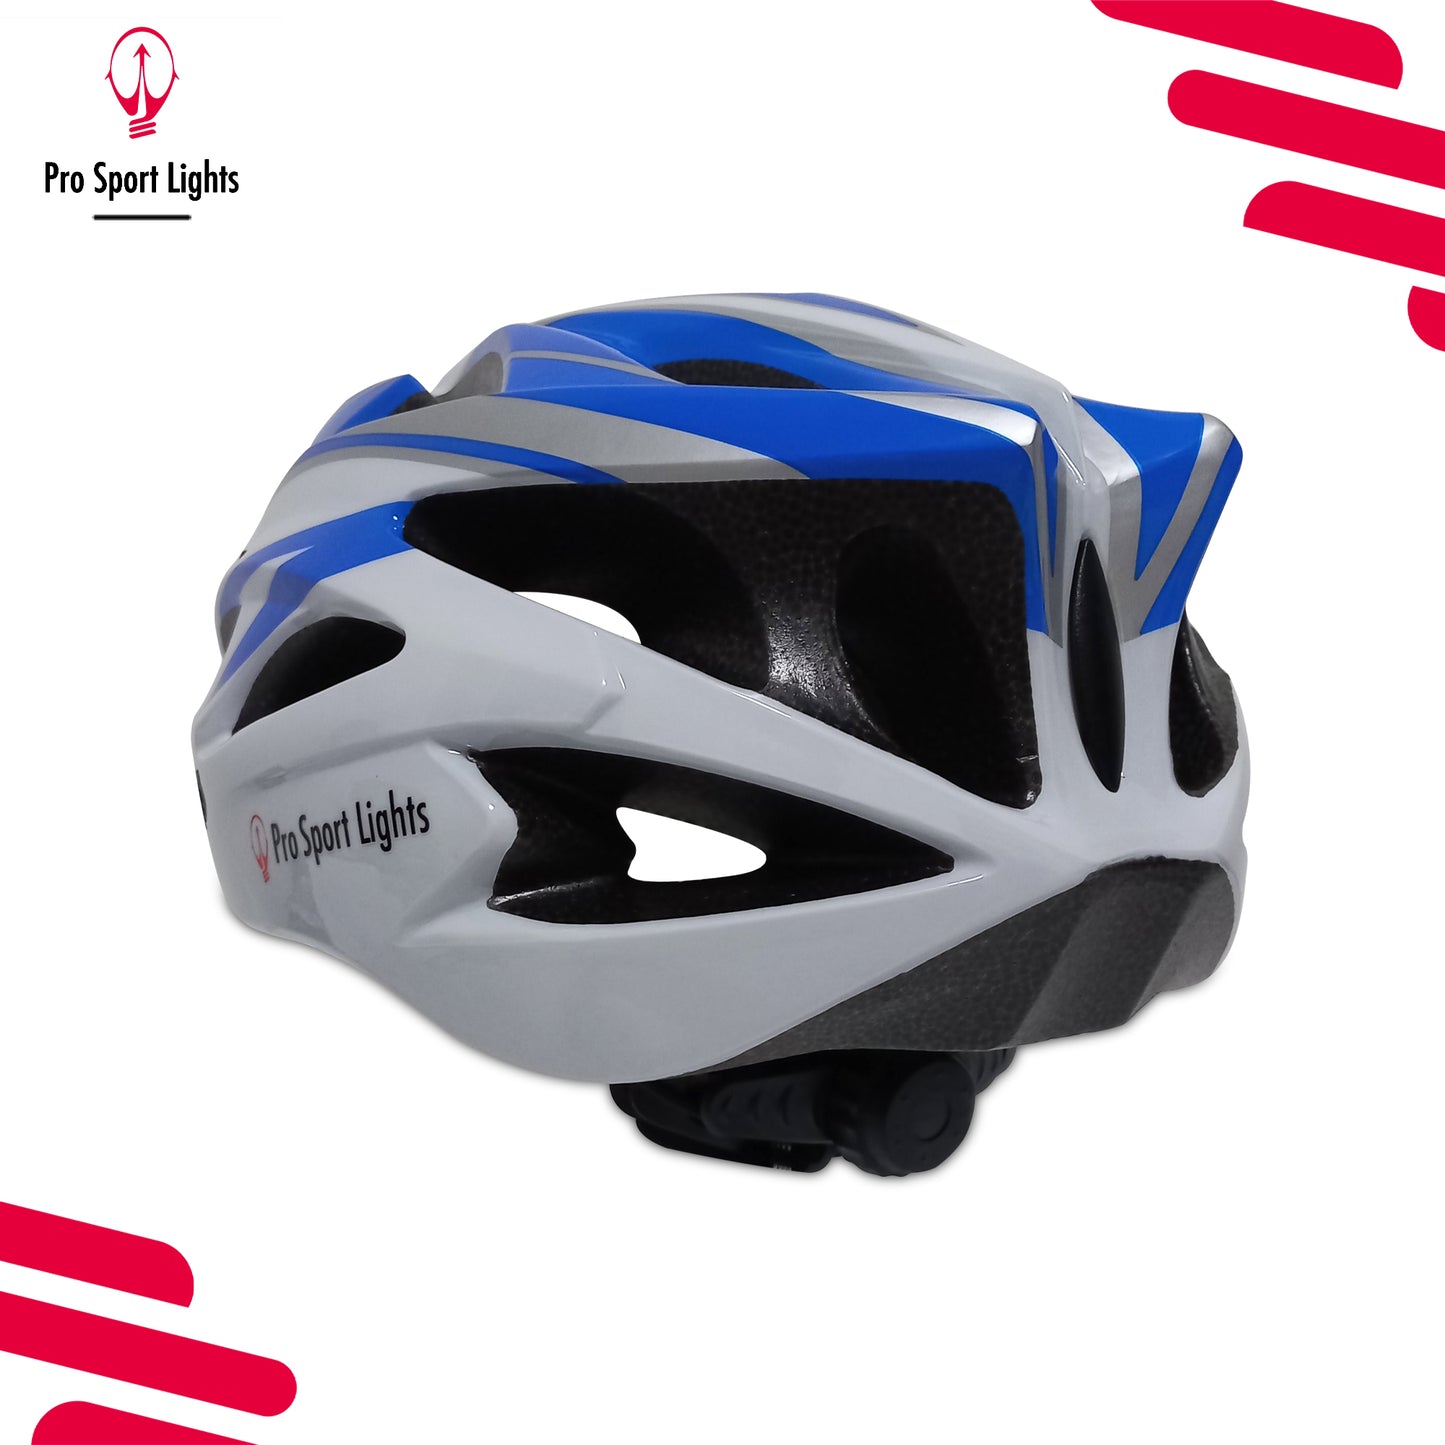 Cycling helmet Pro Sport Lights Women/Men White/Blue - Medium/Large